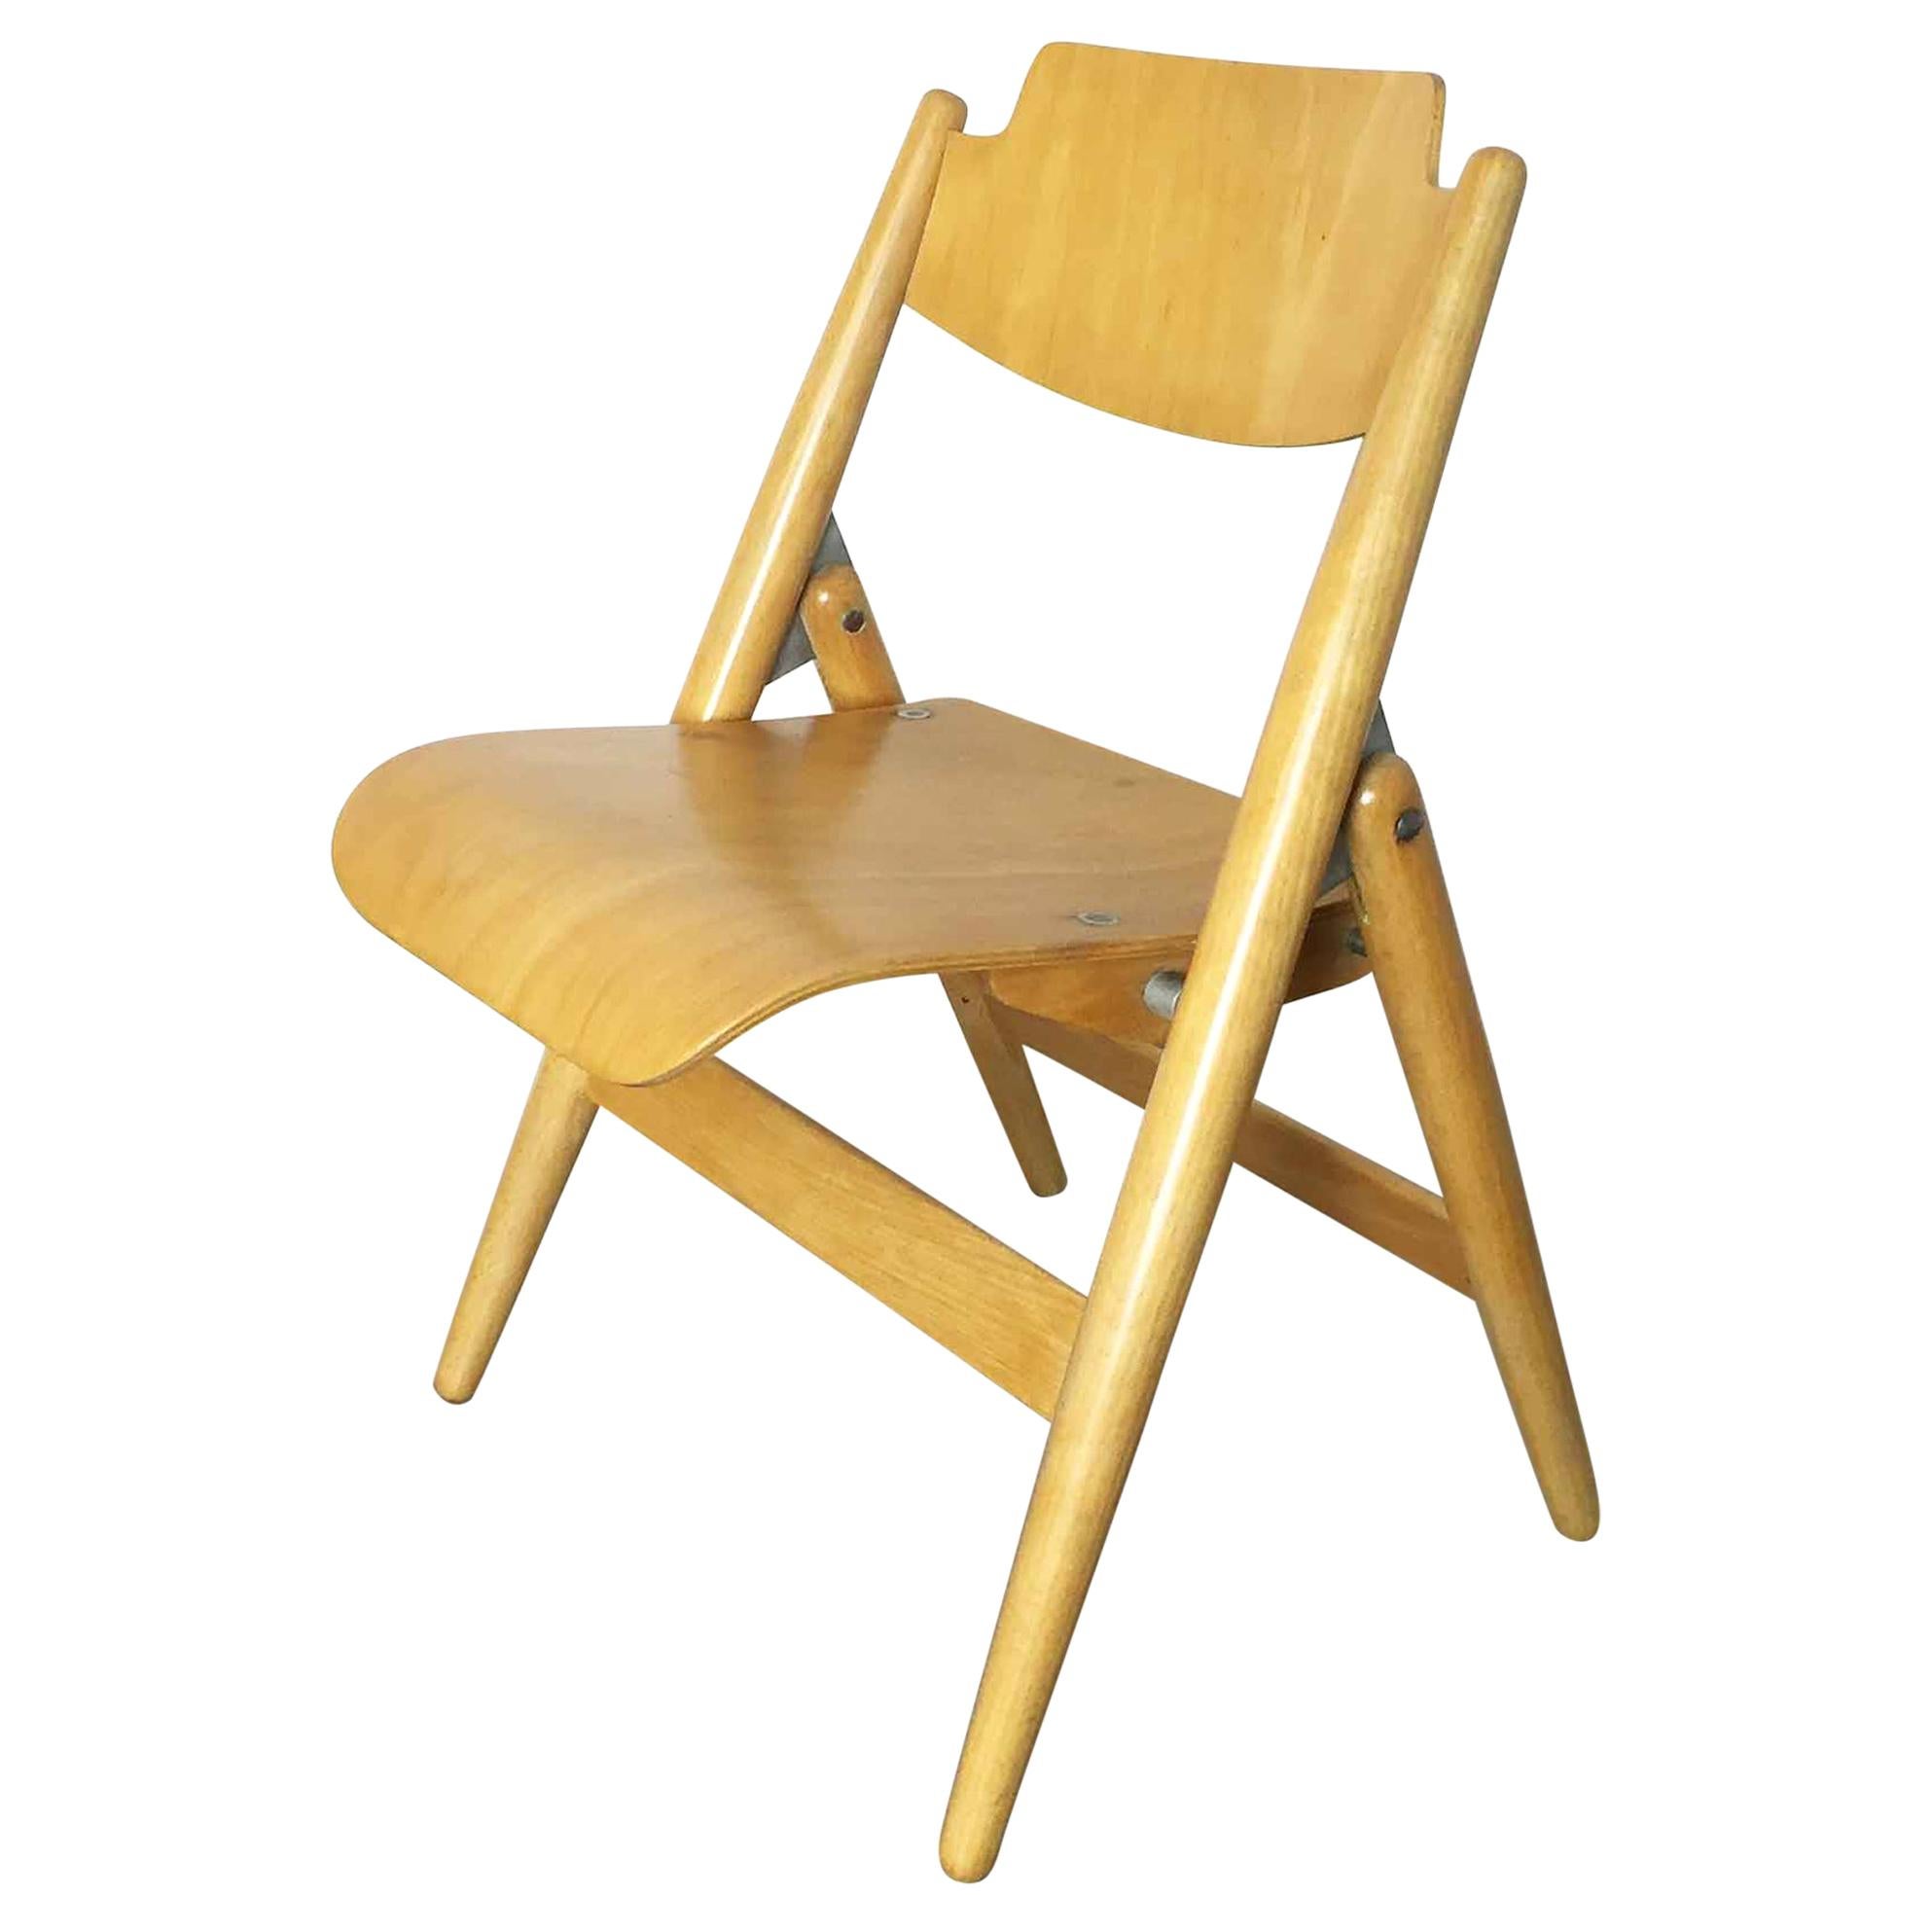 Wooden SE18 Children's Chair by Egon Eiermann for Wilde & Spieth, Germany 1950s